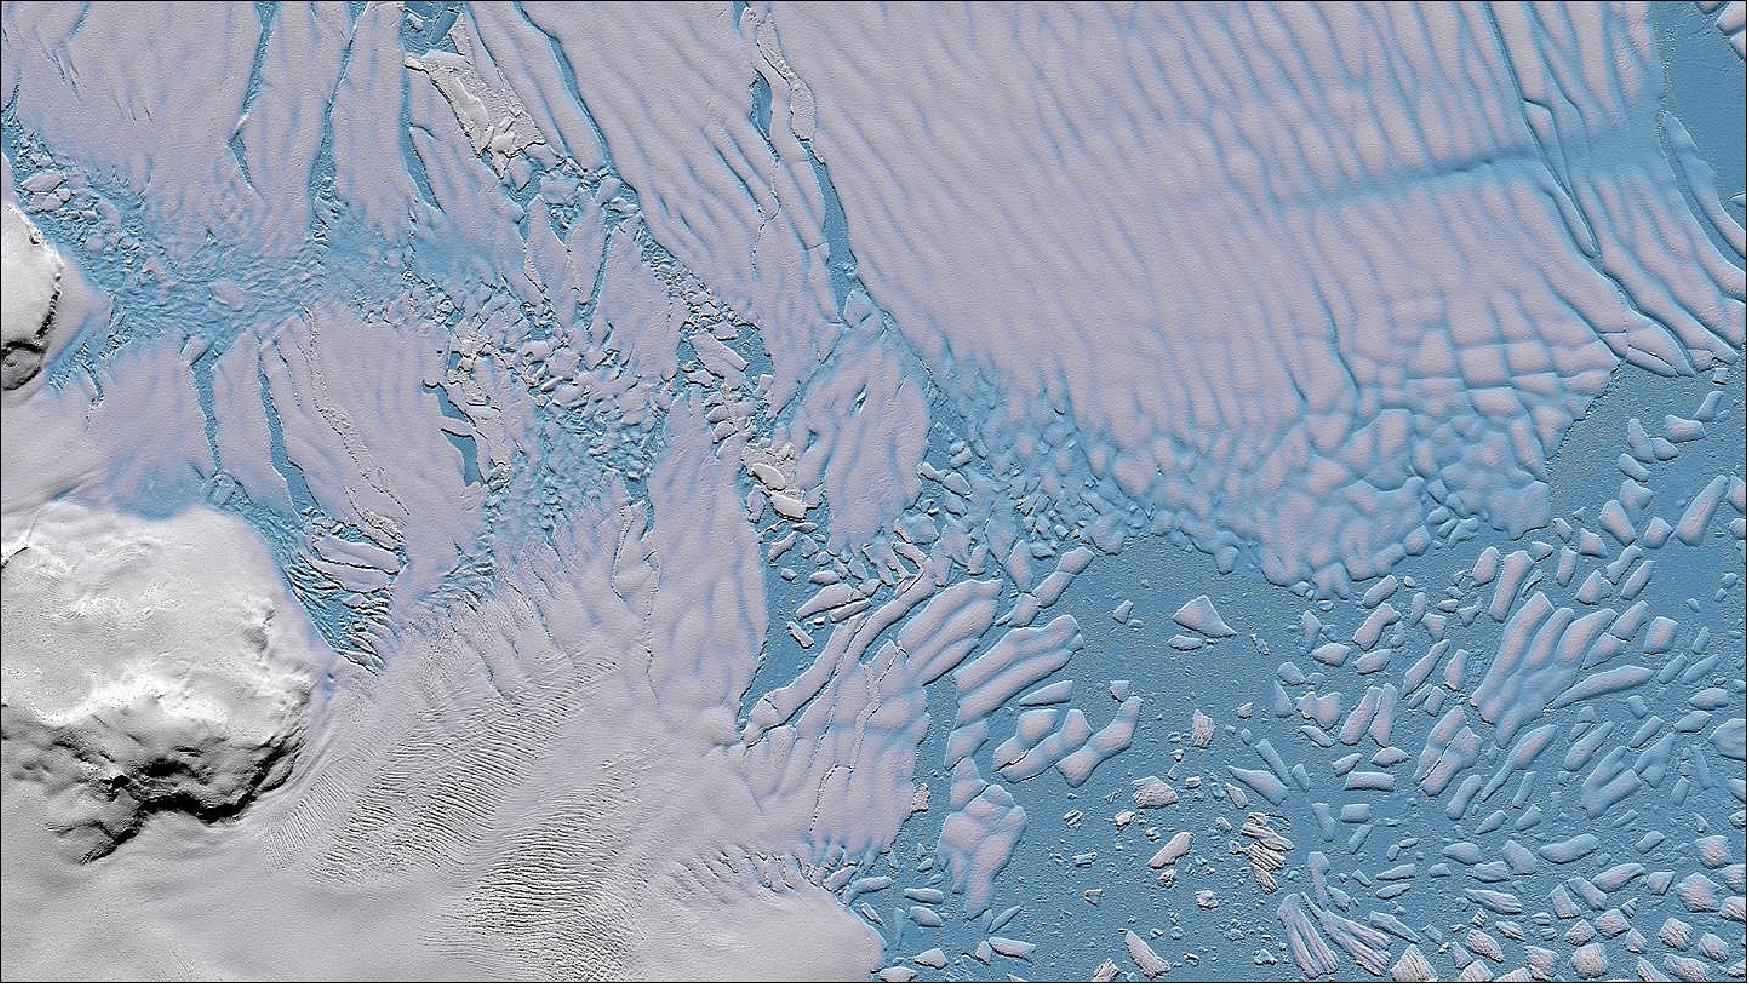 Figure 11: TanDEM-X elevation model -brittle ice shelf of the Thwaites Glacier. For the first time, TanDEM-X elevation models and data from the latest generation of radar satellites enable detailed observation of glacier changes (image credit: DLR, NASA)